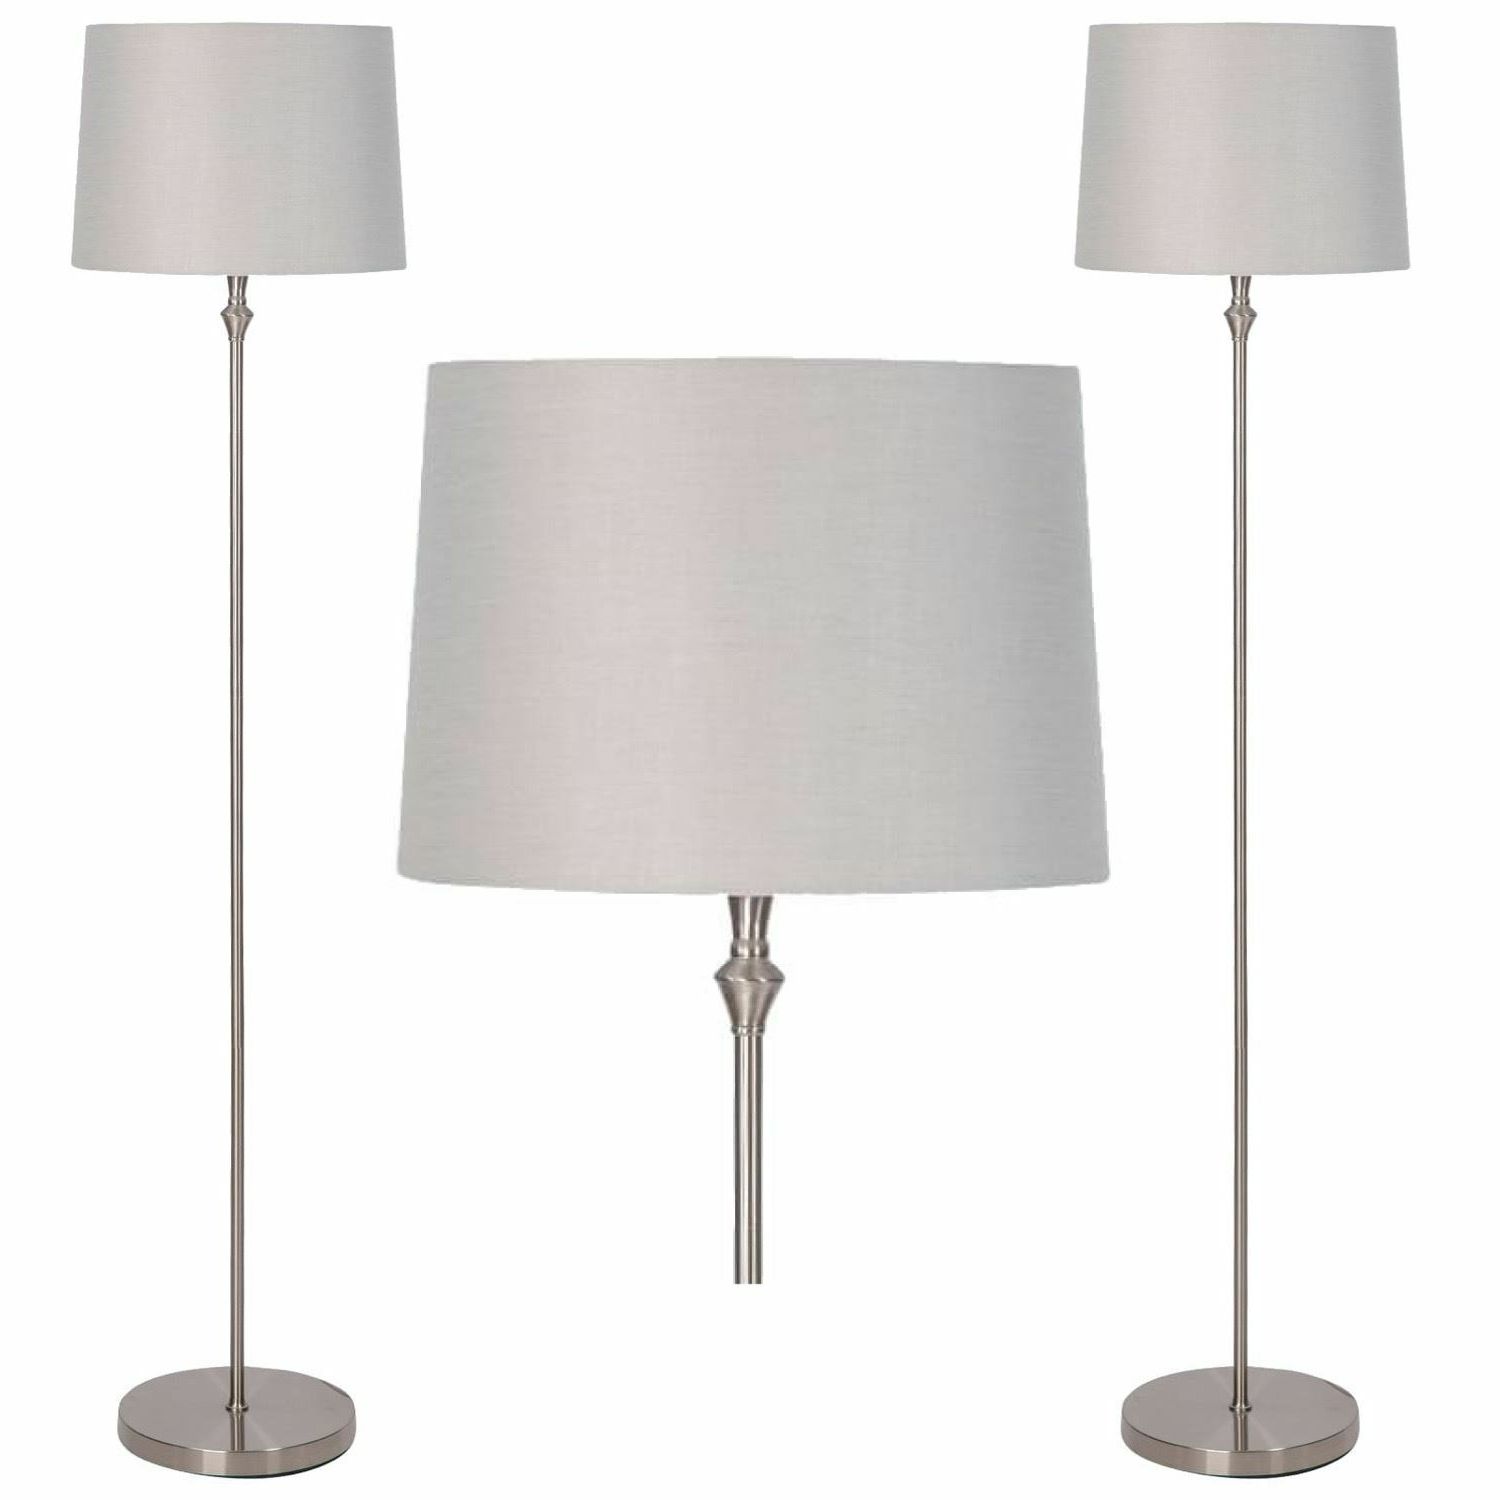 Set Of 2 Satin Nickel Floor Lamps Standard Lights With Grey Shades | Ebay In Glass Satin Nickel Floor Lamps (Gallery 20 of 20)